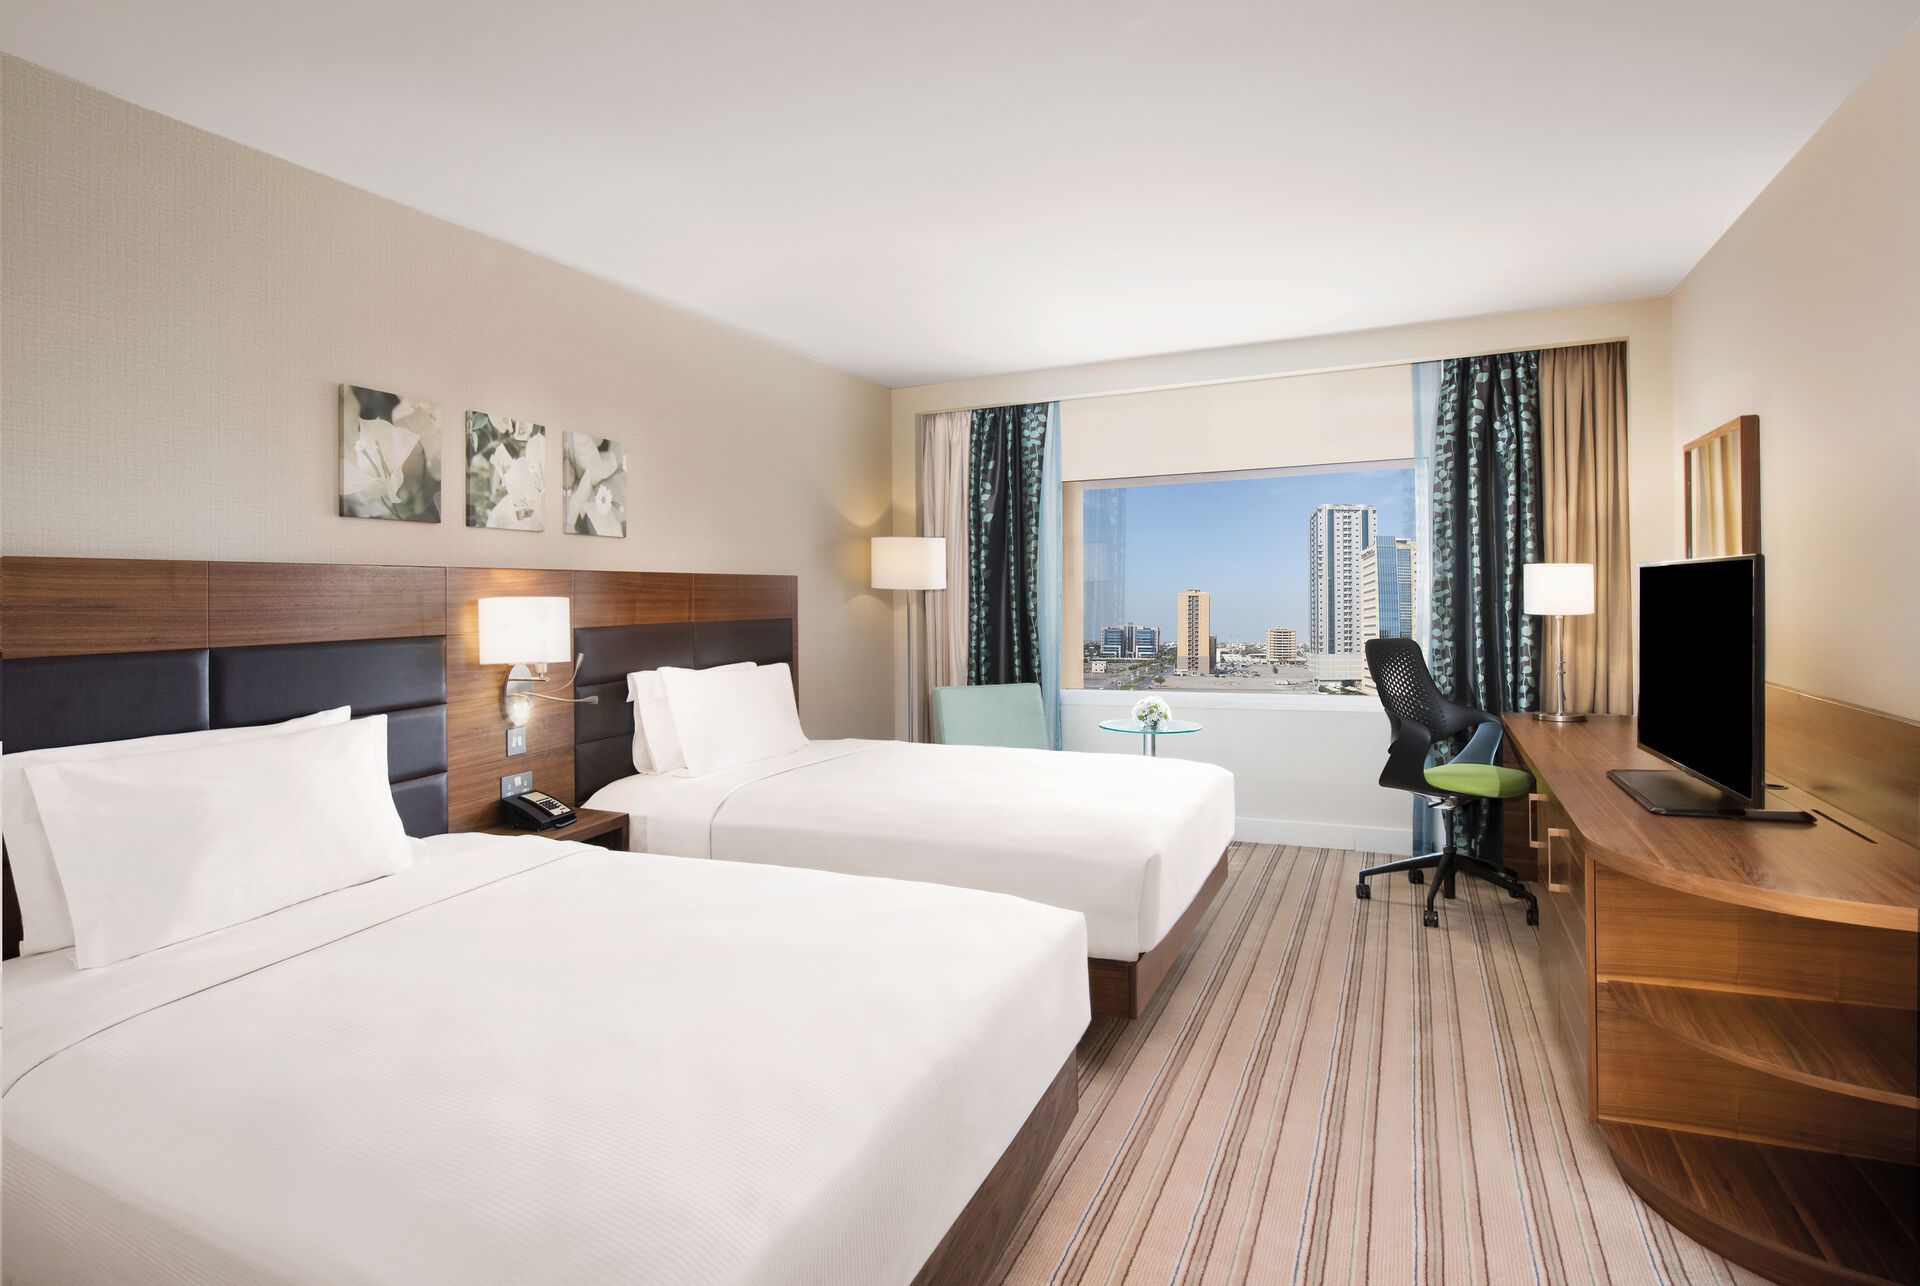 Emirats Arabes Unis - Ras Al Khaimah - Hôtel Hilton Garden Inn Ras Al Khaimah 4*